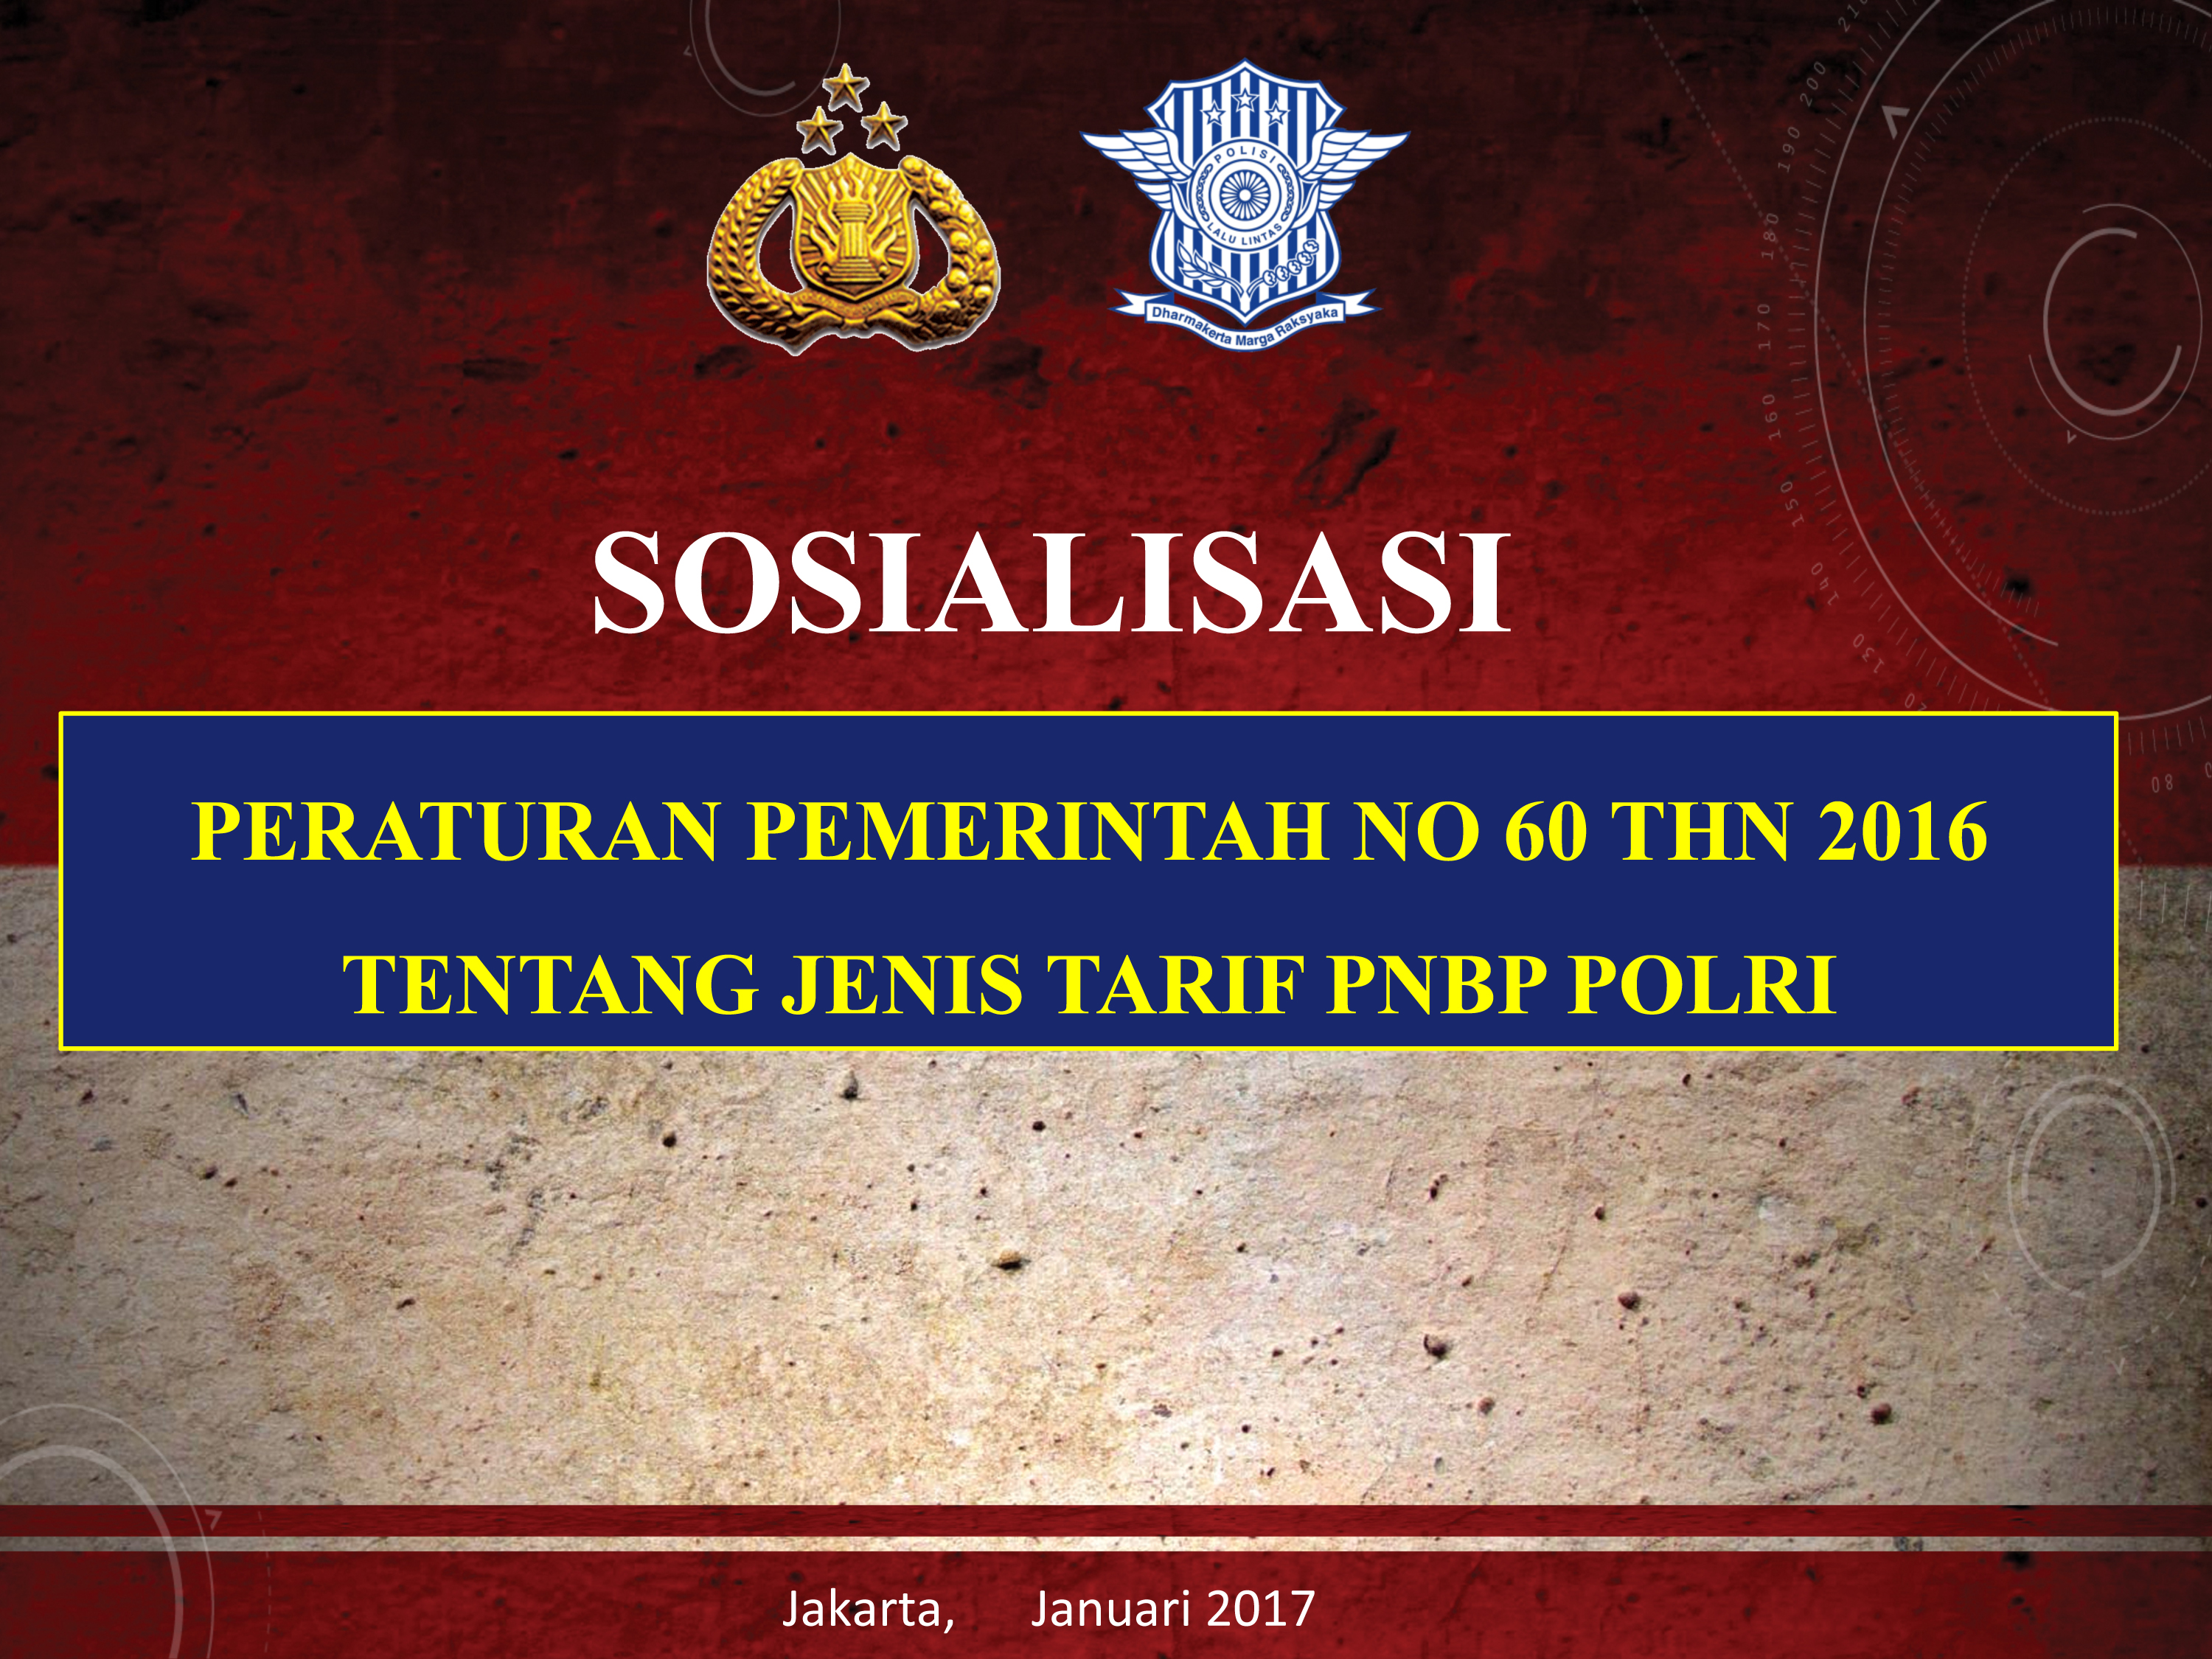 SOSIALISASI PERATURAN NO 60 THN 2016 TENTANG JENIS TARIF PNBP POLRI